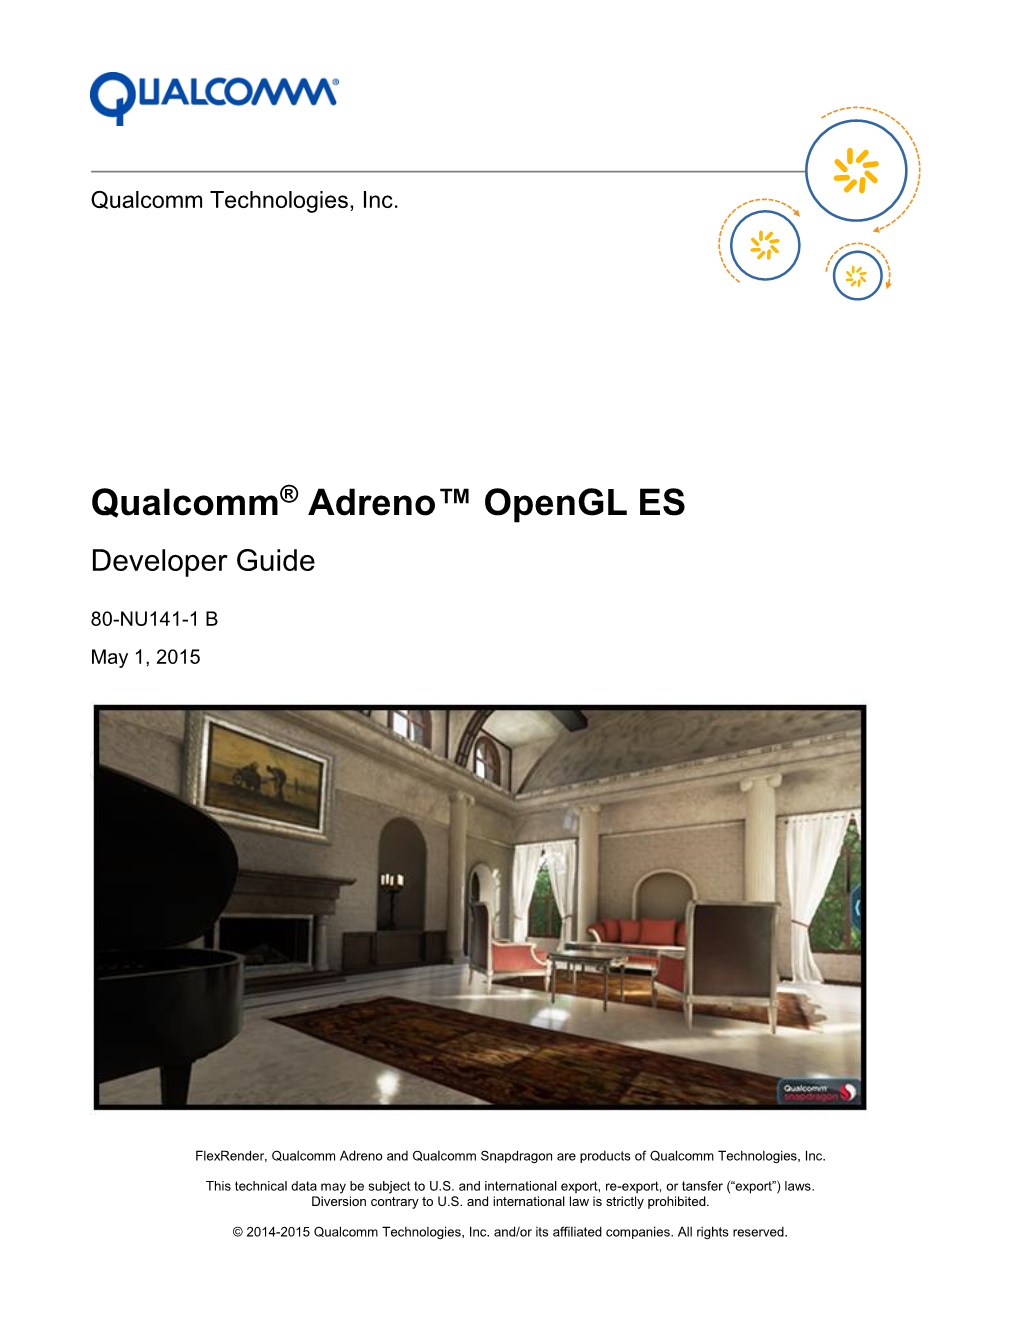 Qualcomm® Adreno™ Opengl ES Developer Guide